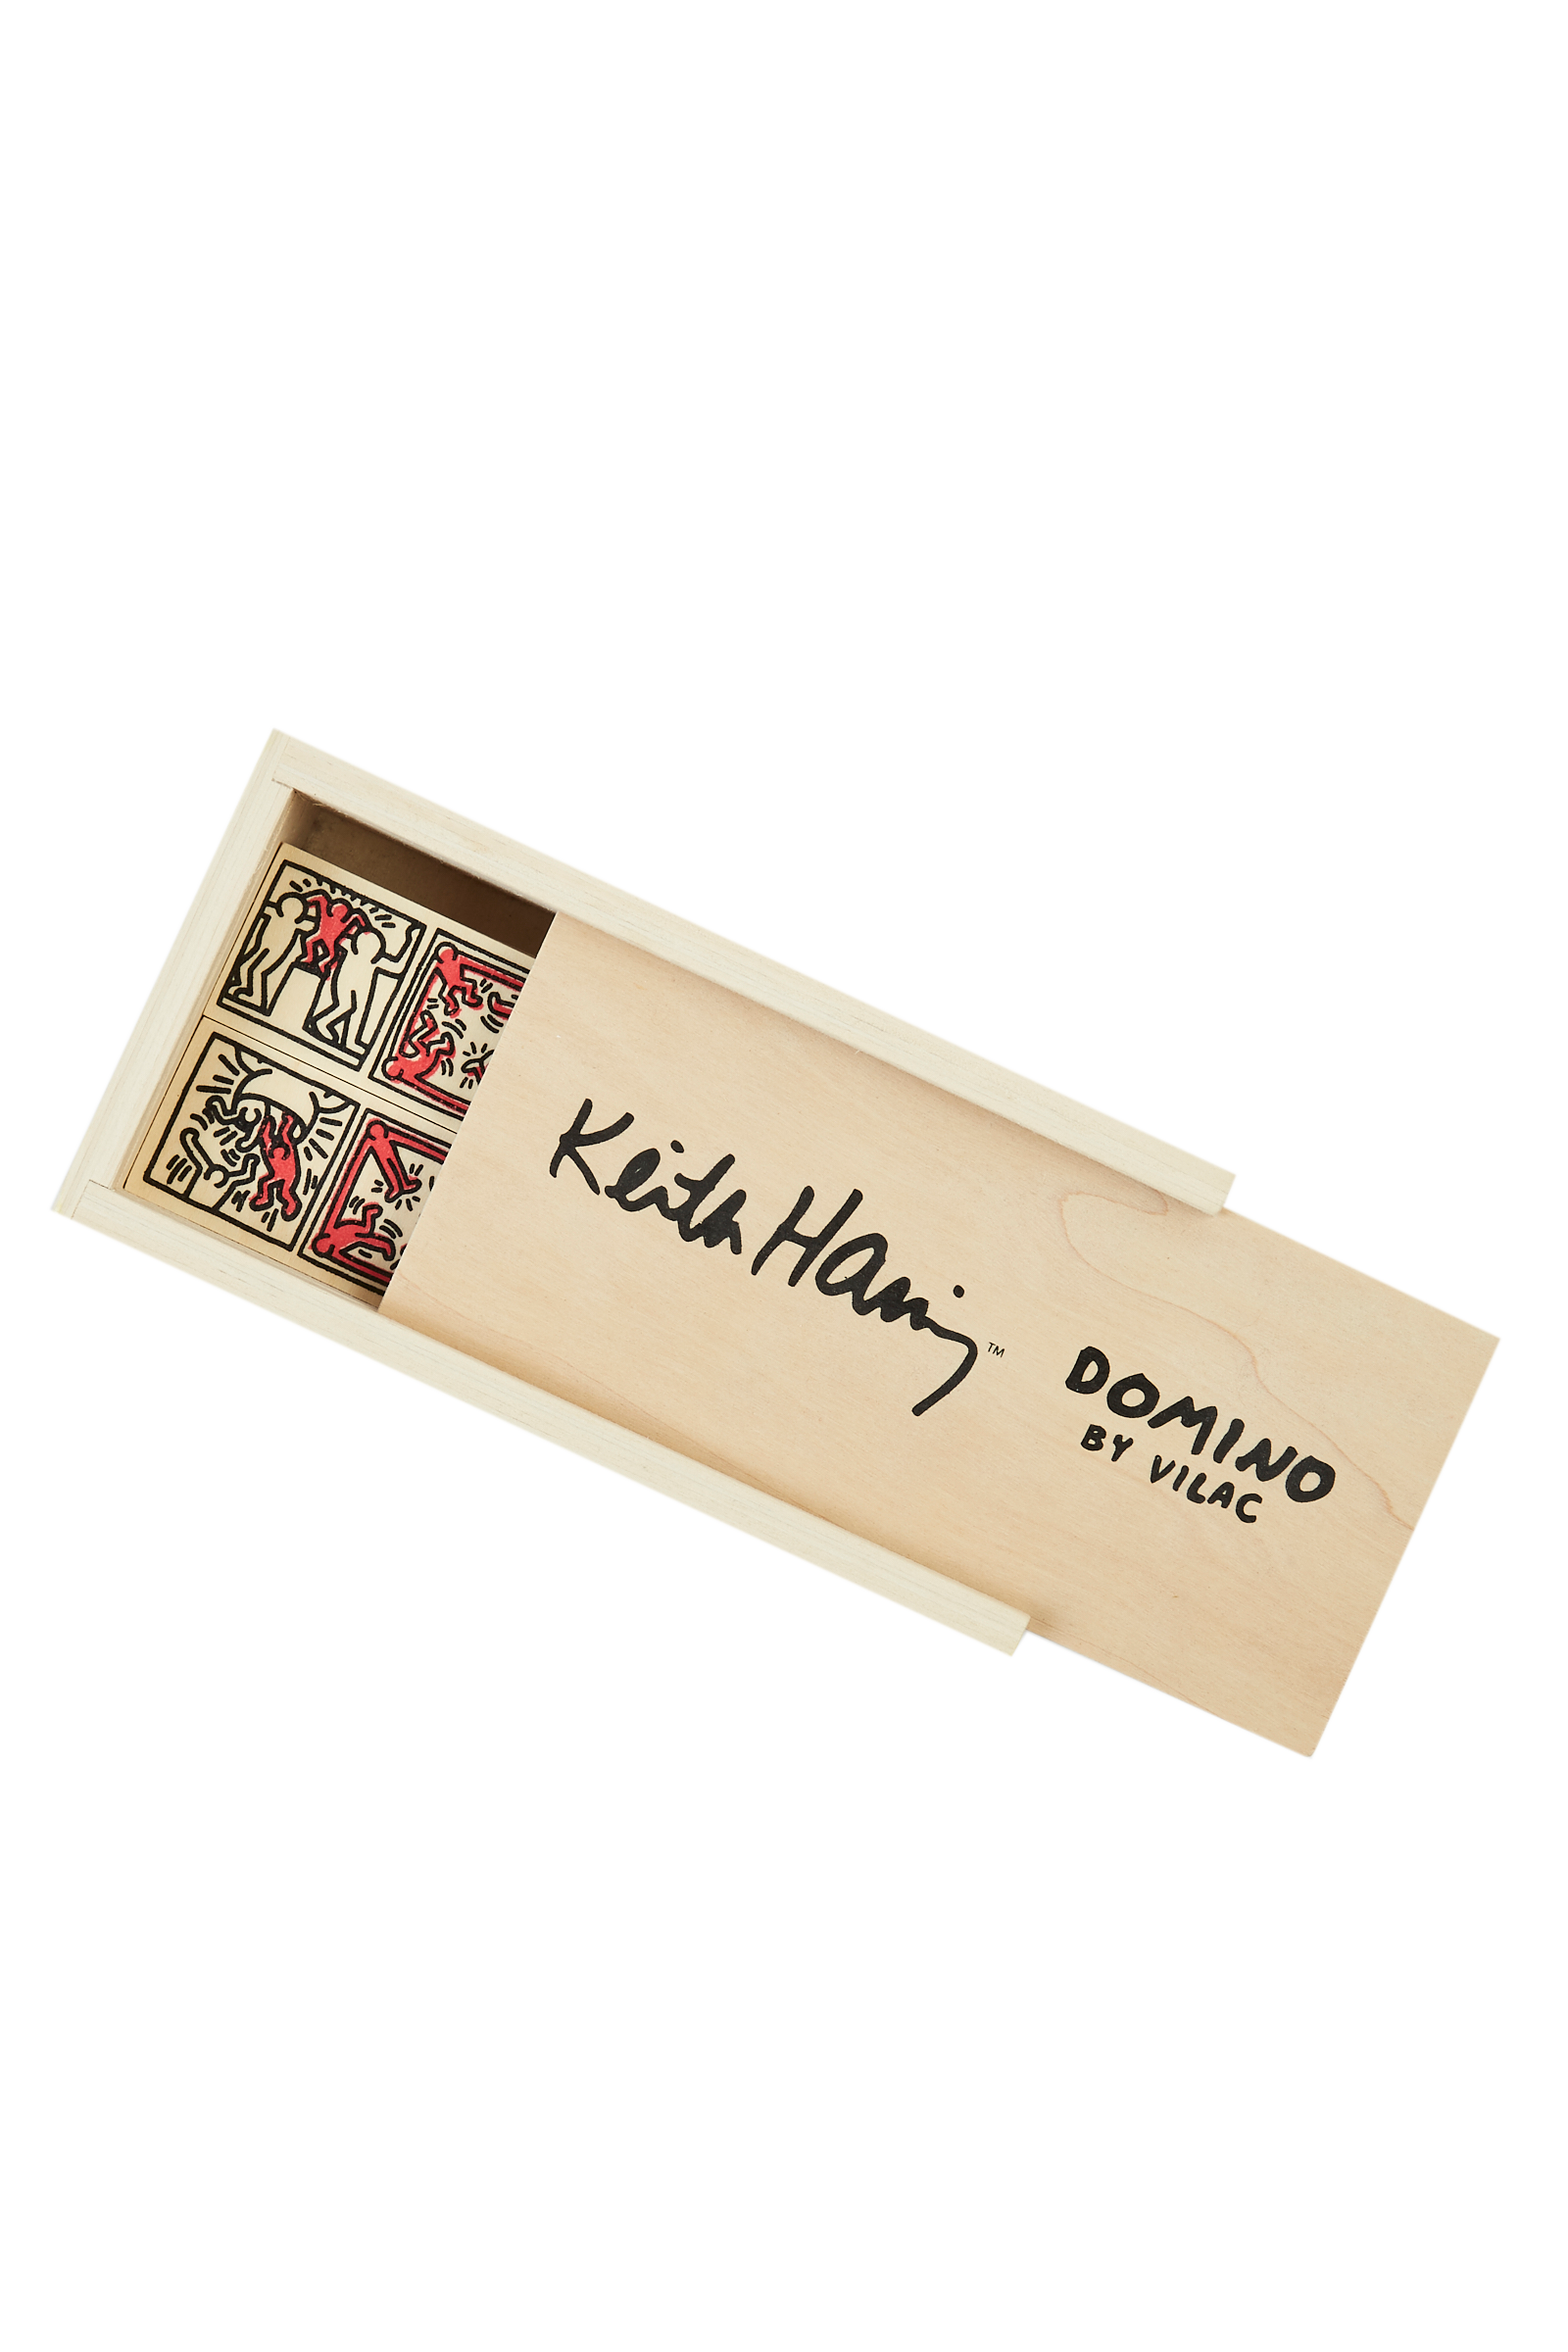 Keith Haring - Dominos 